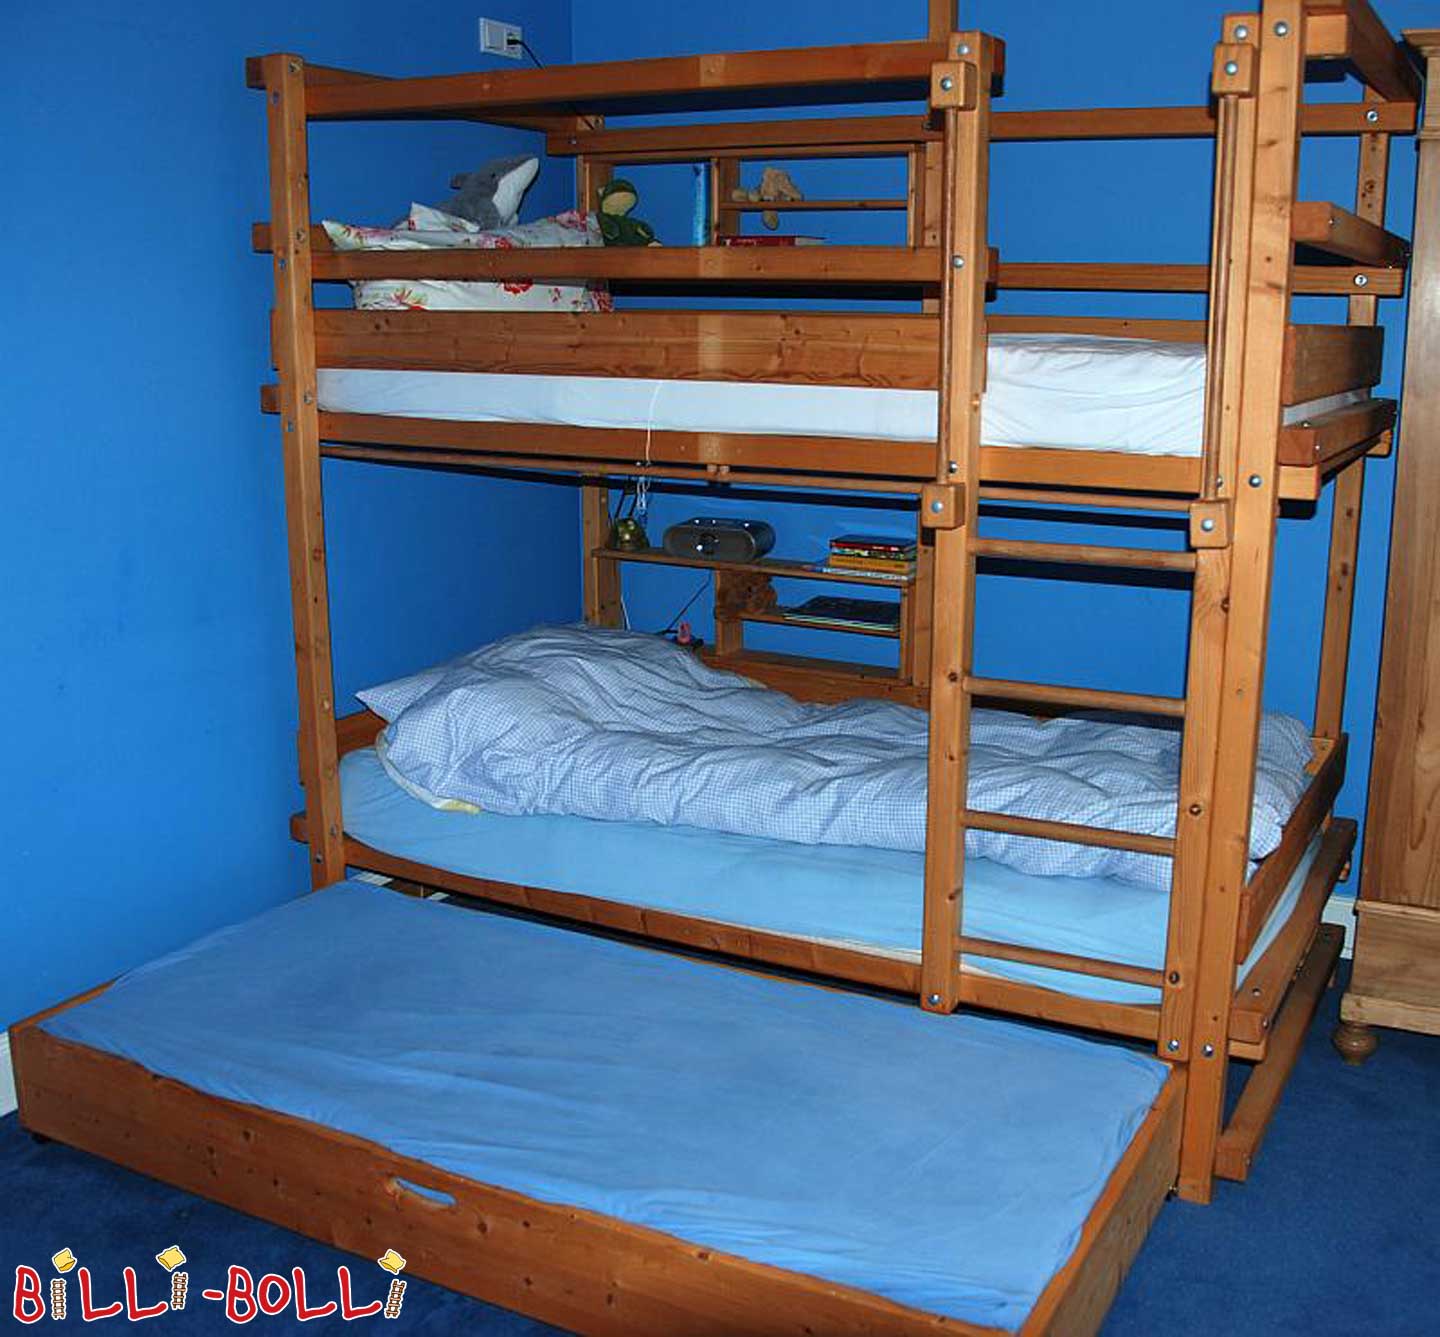 Billi Bolli litera 'Pirata' con cama box cama (Categoría: cama infantil segunda mano)